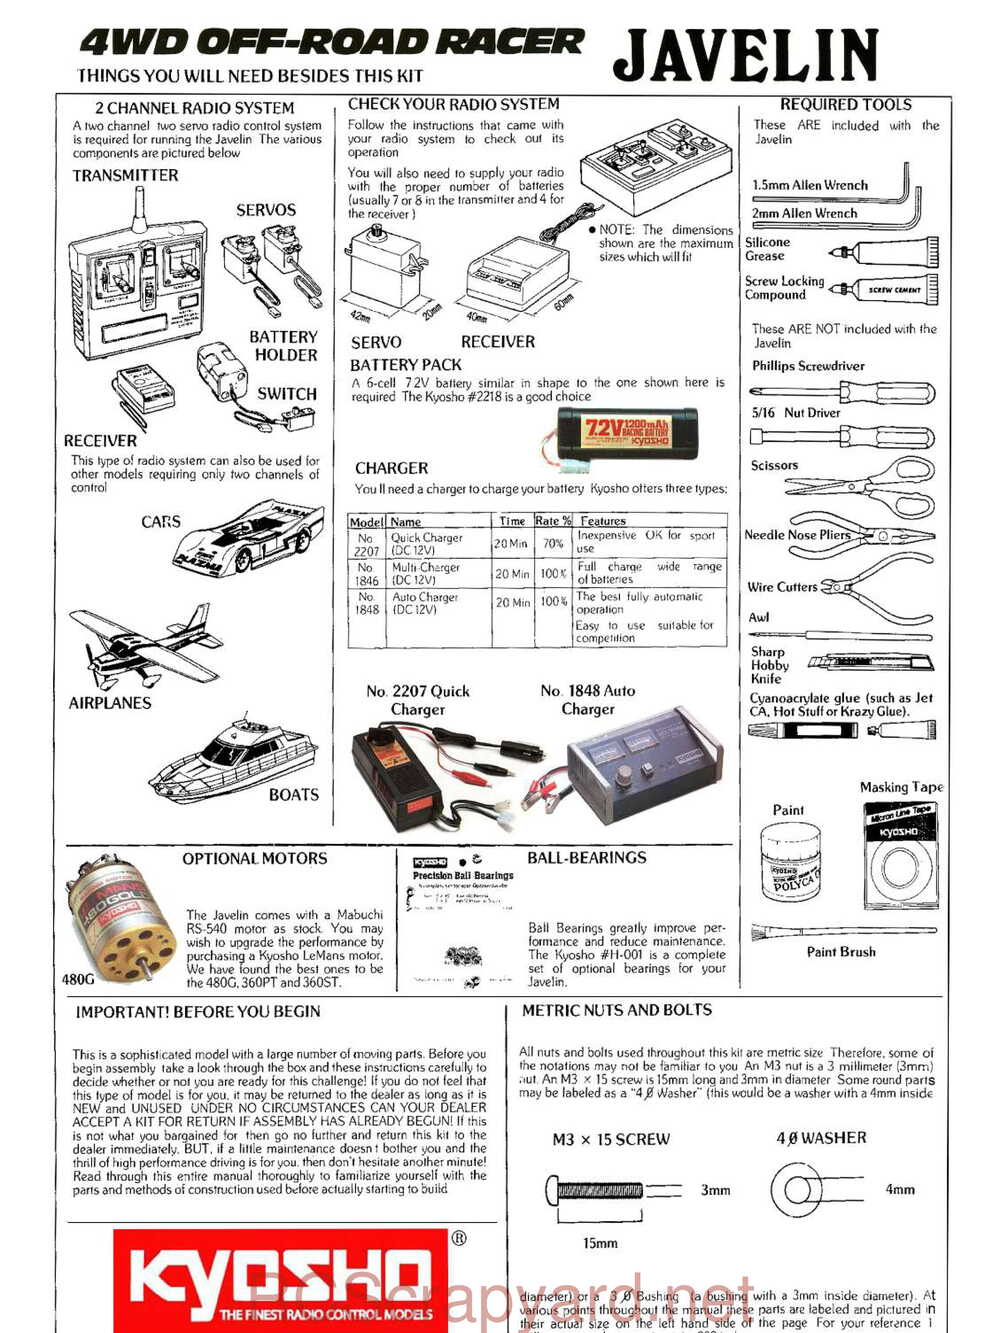 Kyosho - 3031 - Javelin - Manual - Page 02